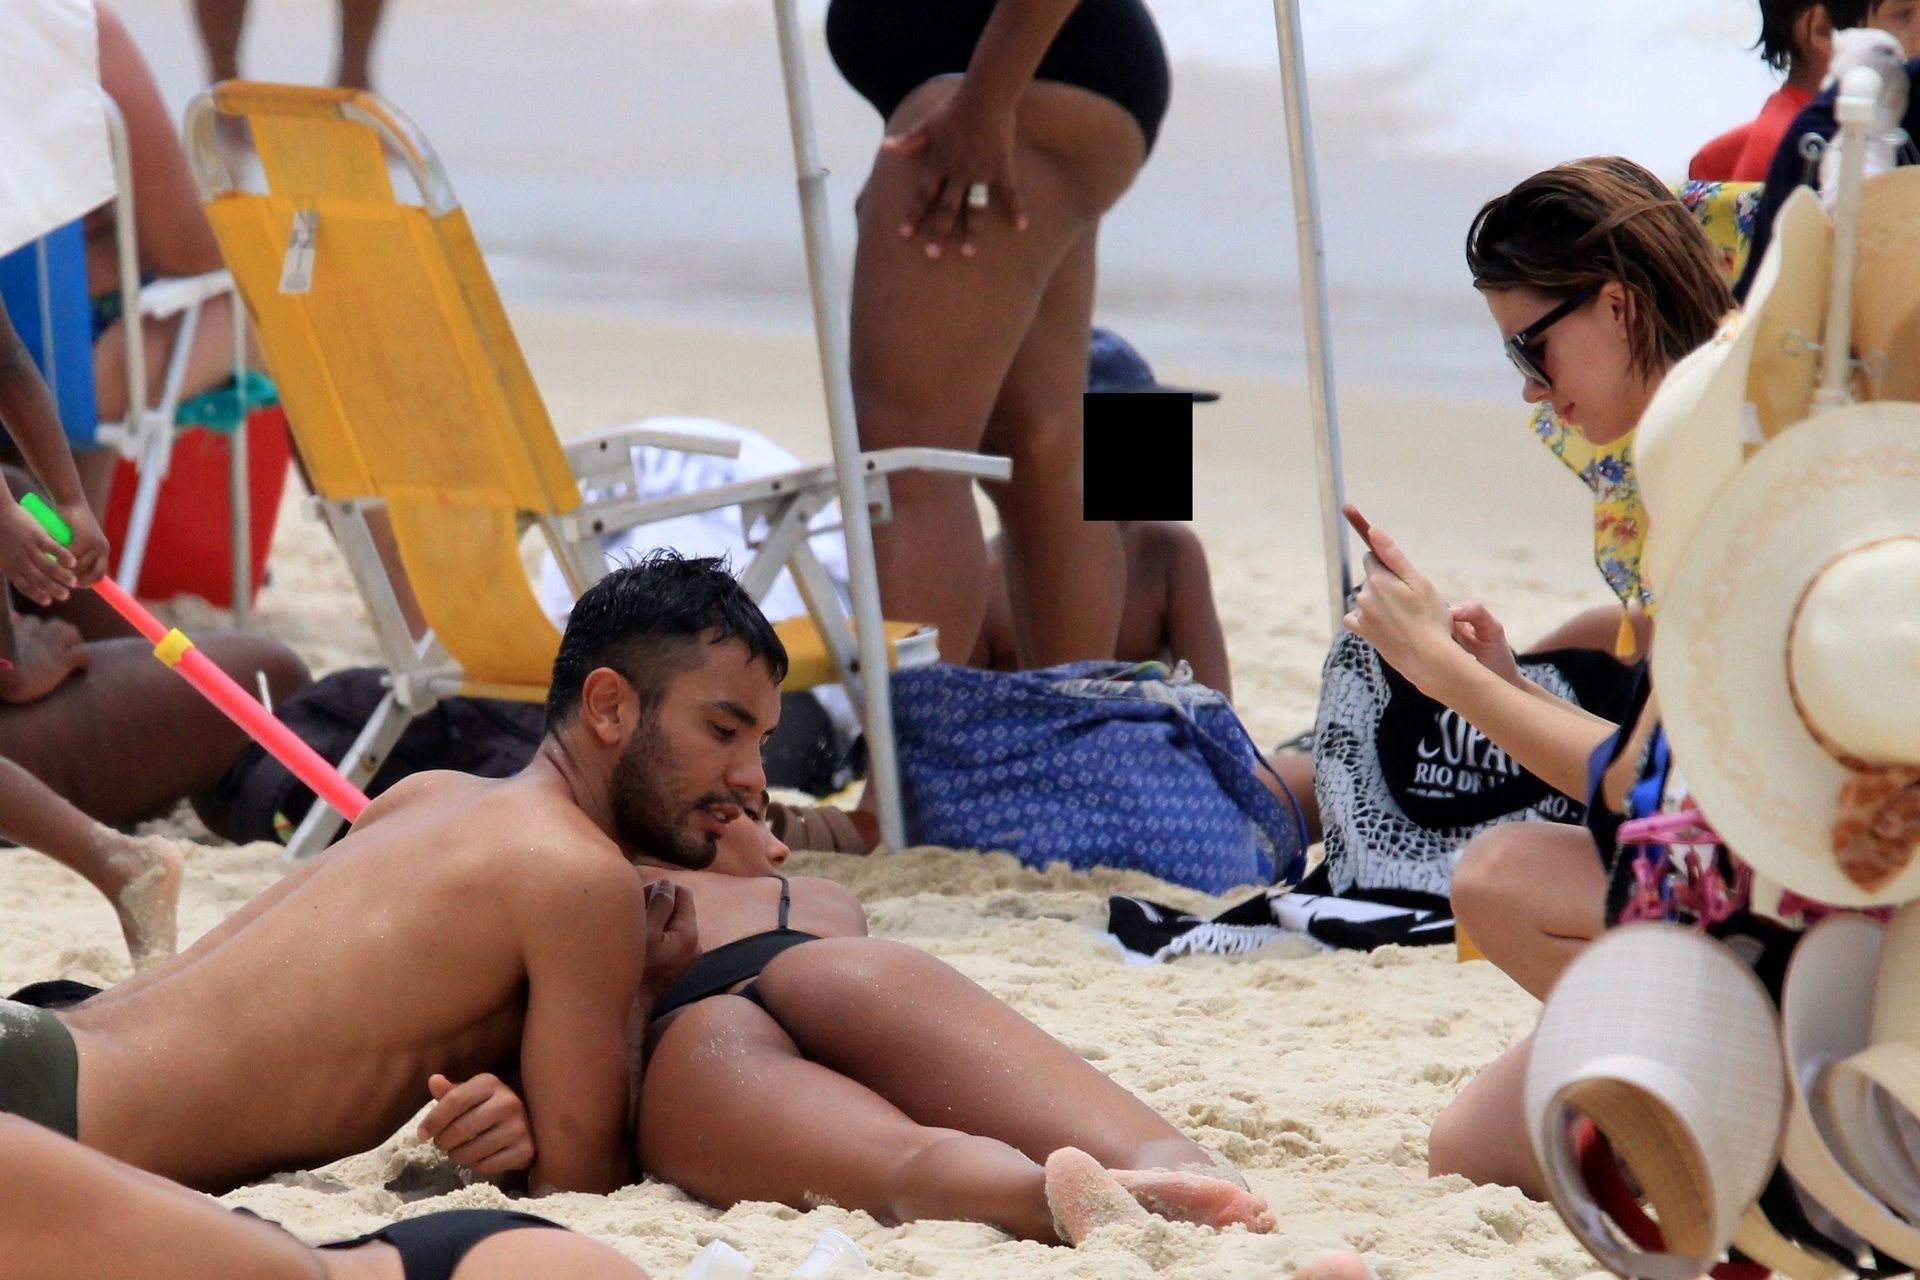 Sexy Tina Kunakey Enjoys Her Vacation In Rio De Janeiro 0047